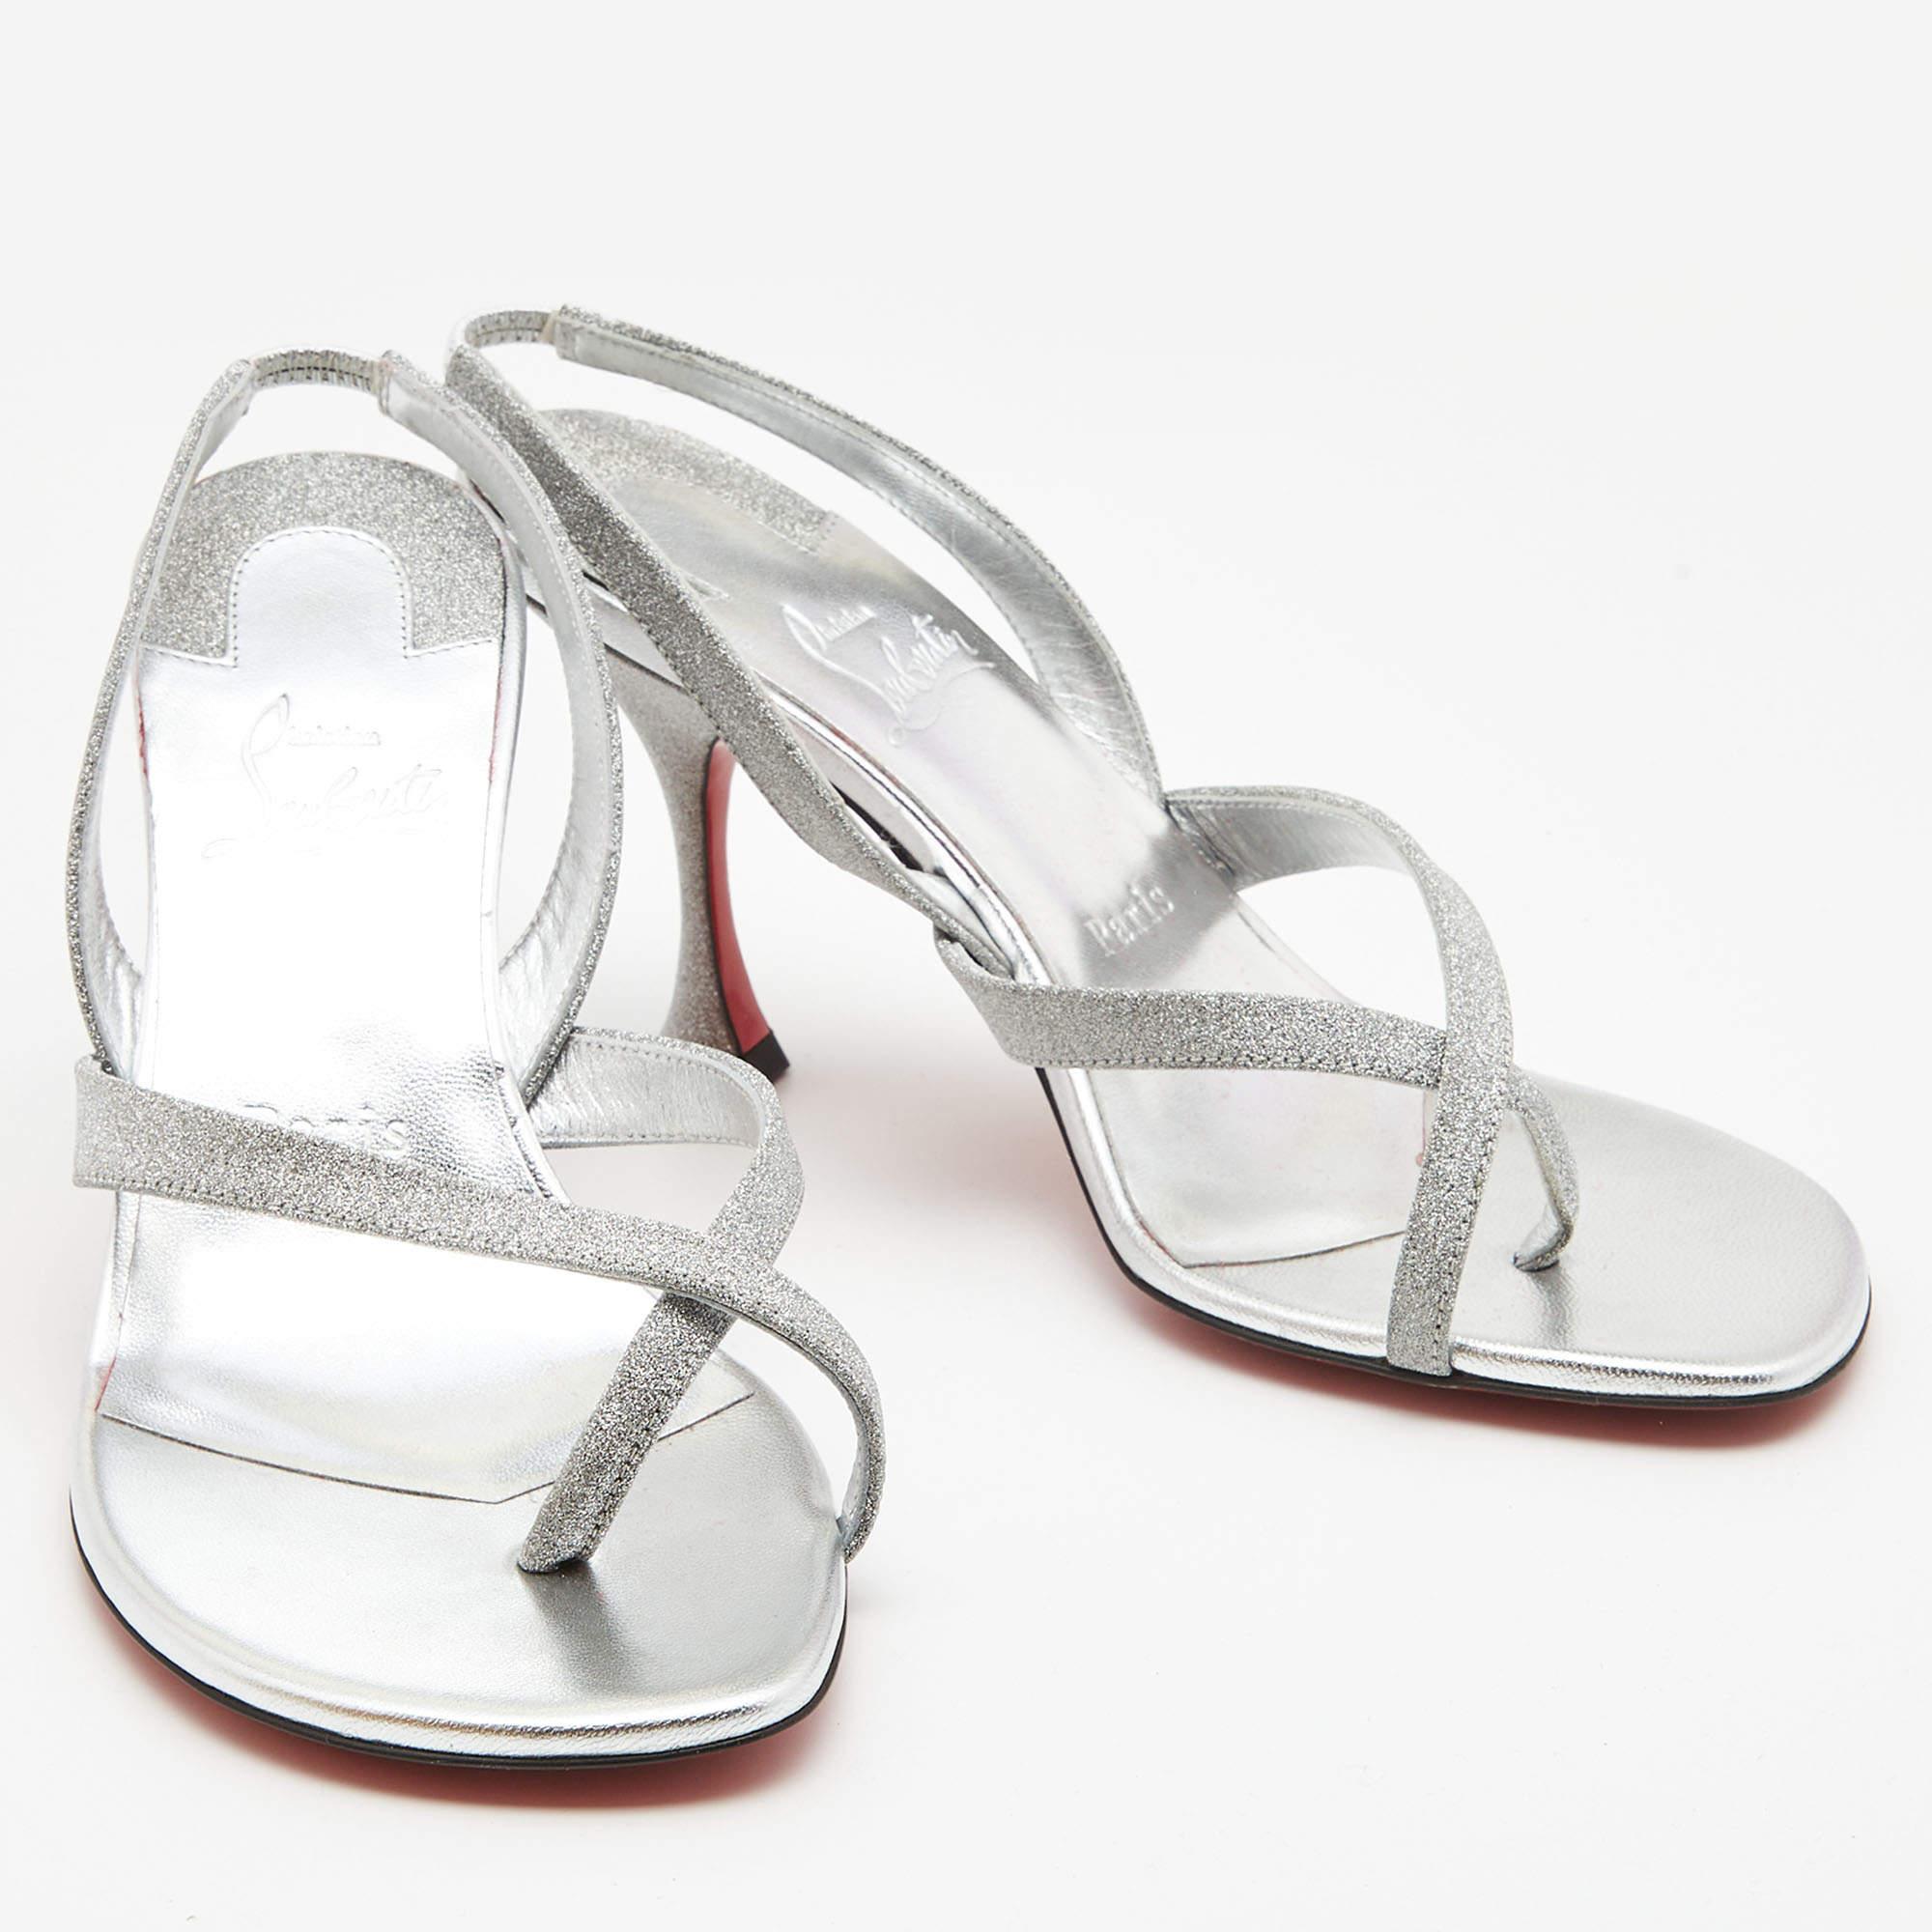 Women's Christian Louboutin Silver Glitter Slingback Sandals Size 37